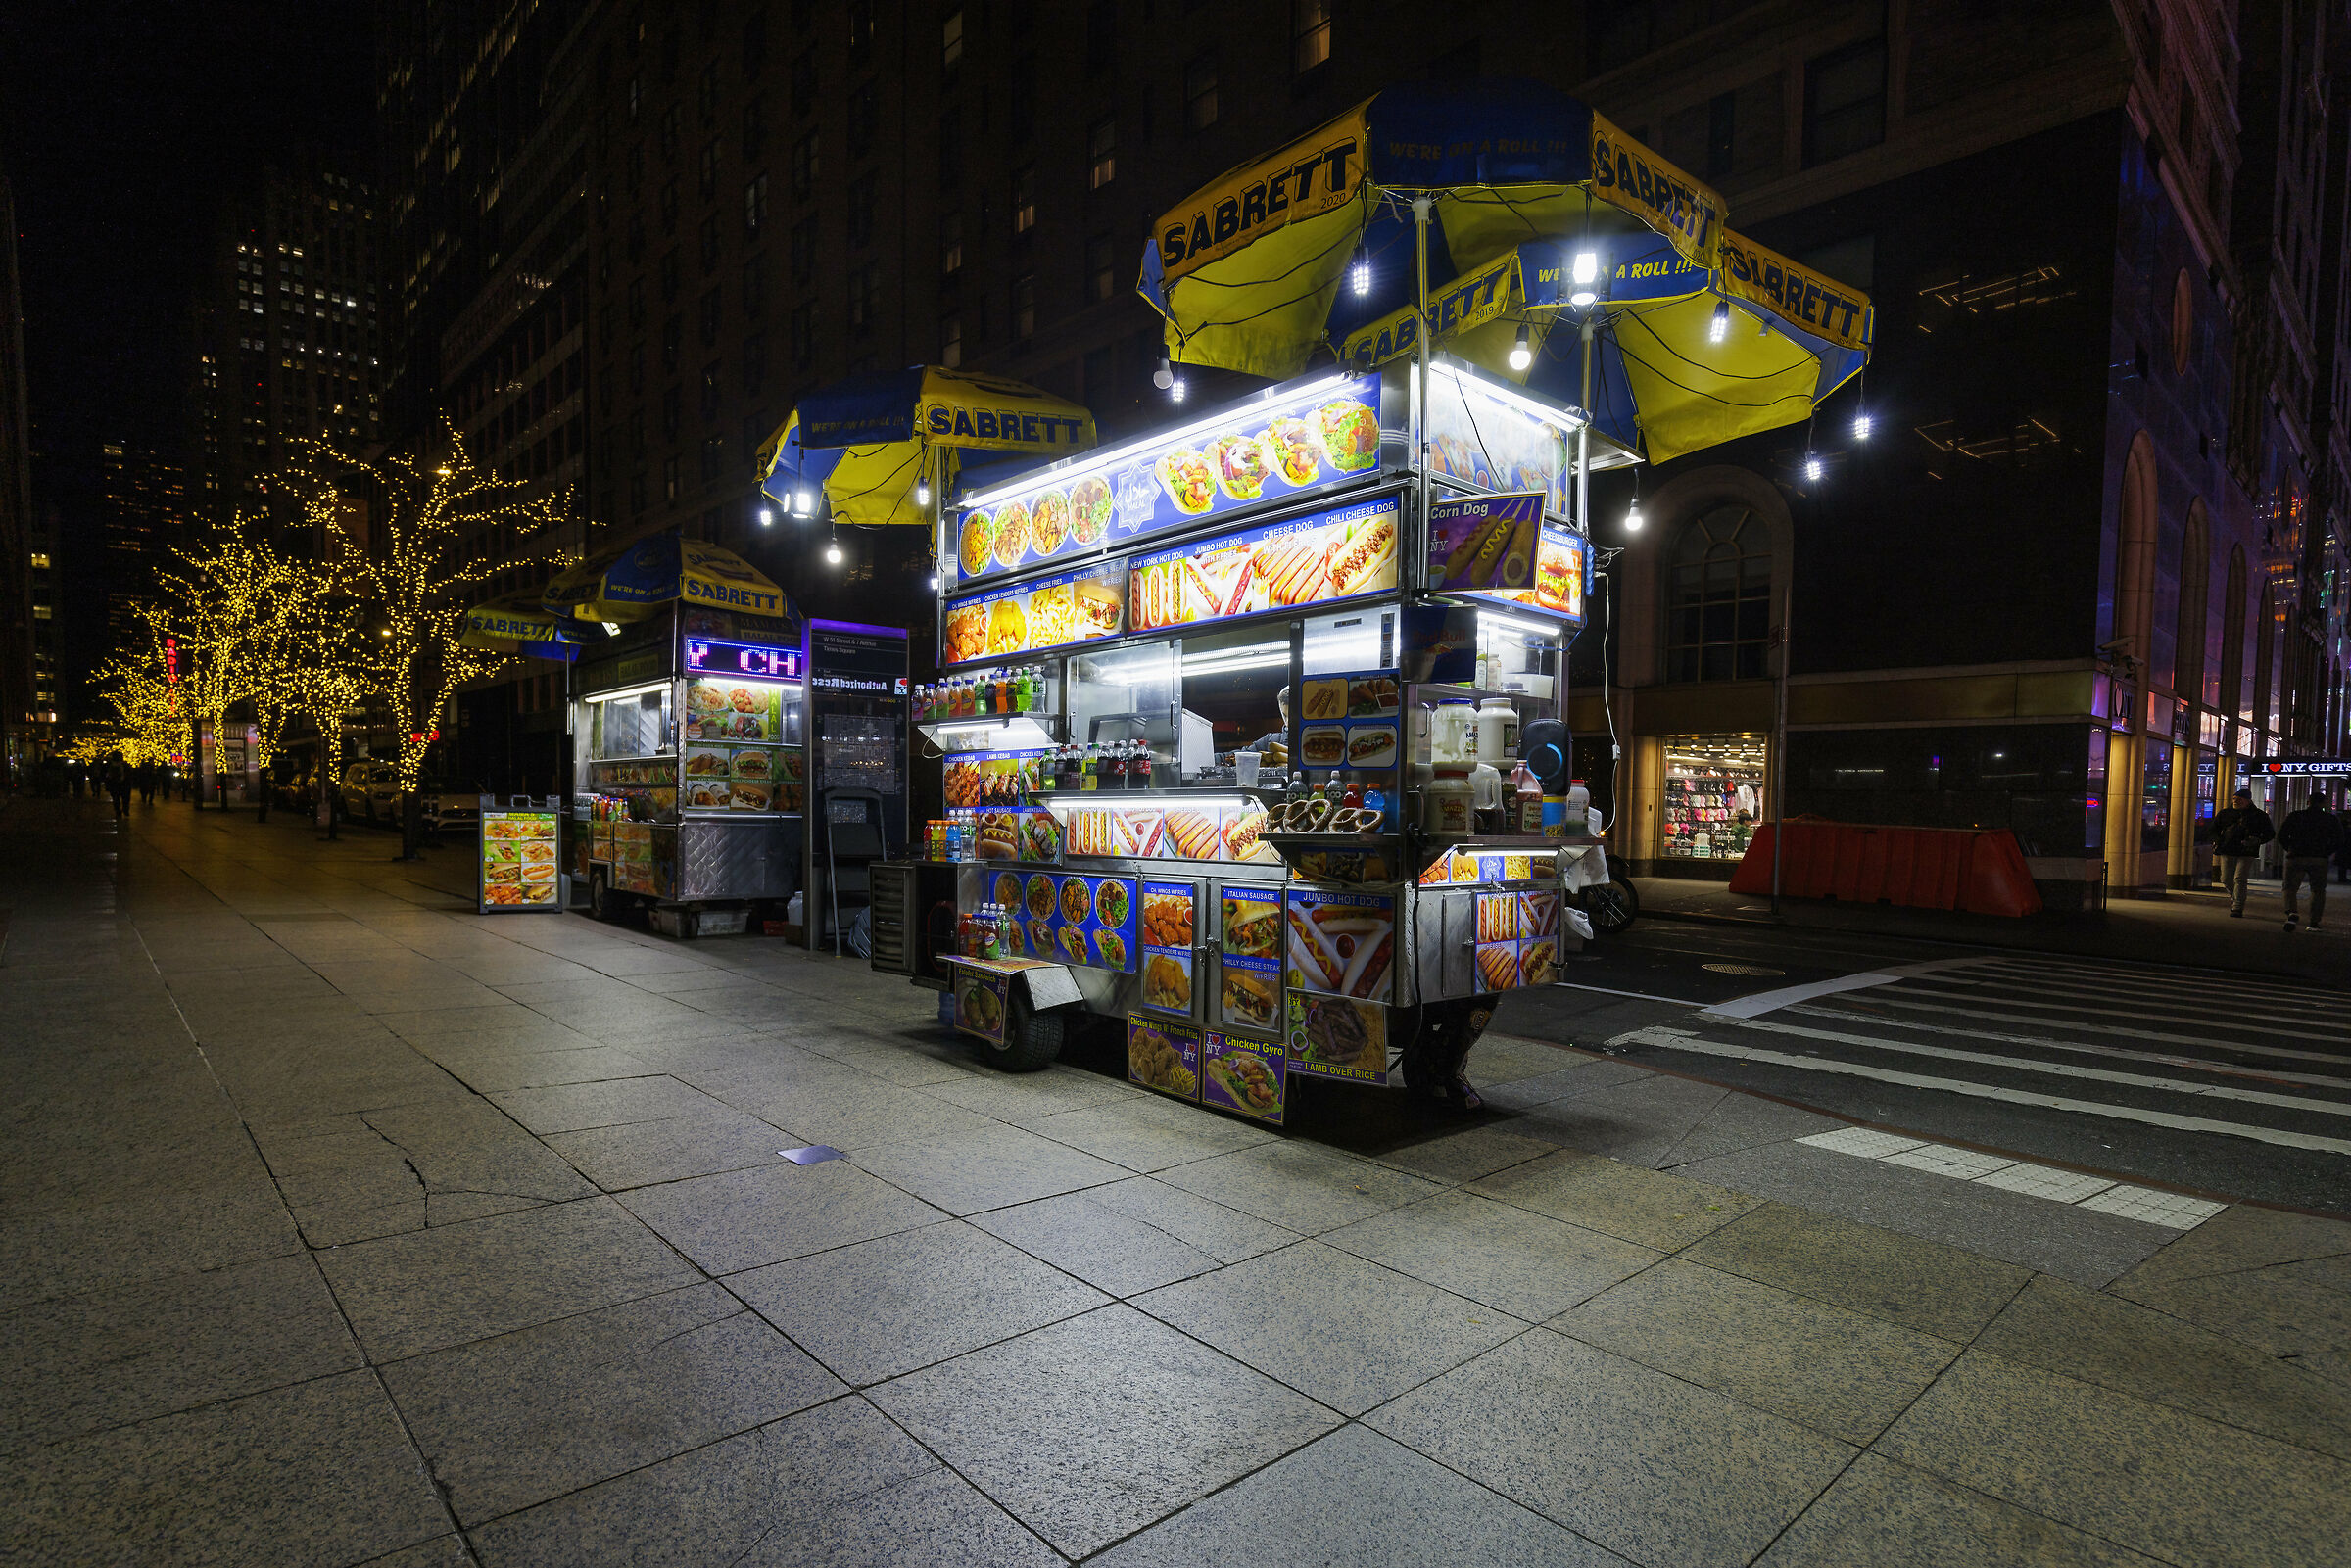 Street Food in NYC...